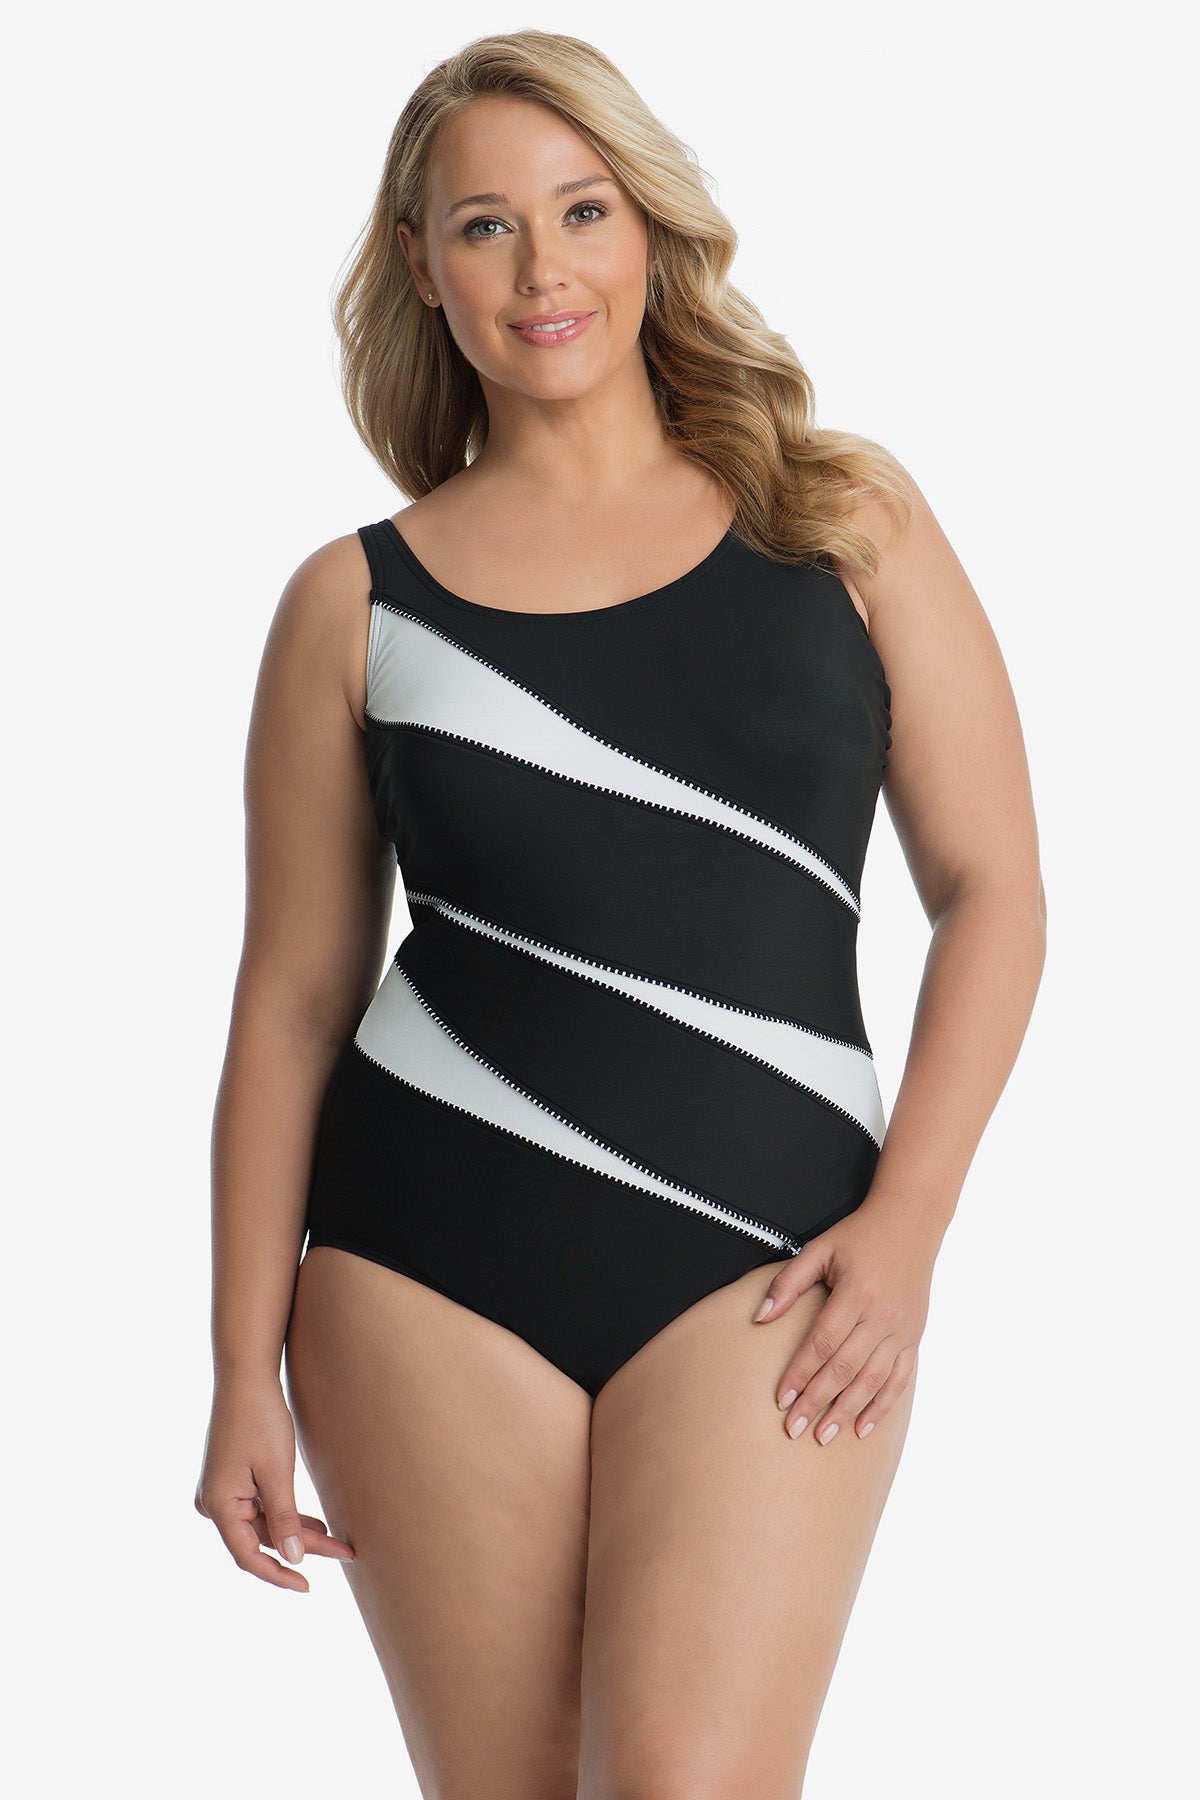 Shop Plus-sized (D-G Cup) Swimwear Online Australia At Splash Swimwear –  Splash Swimwear